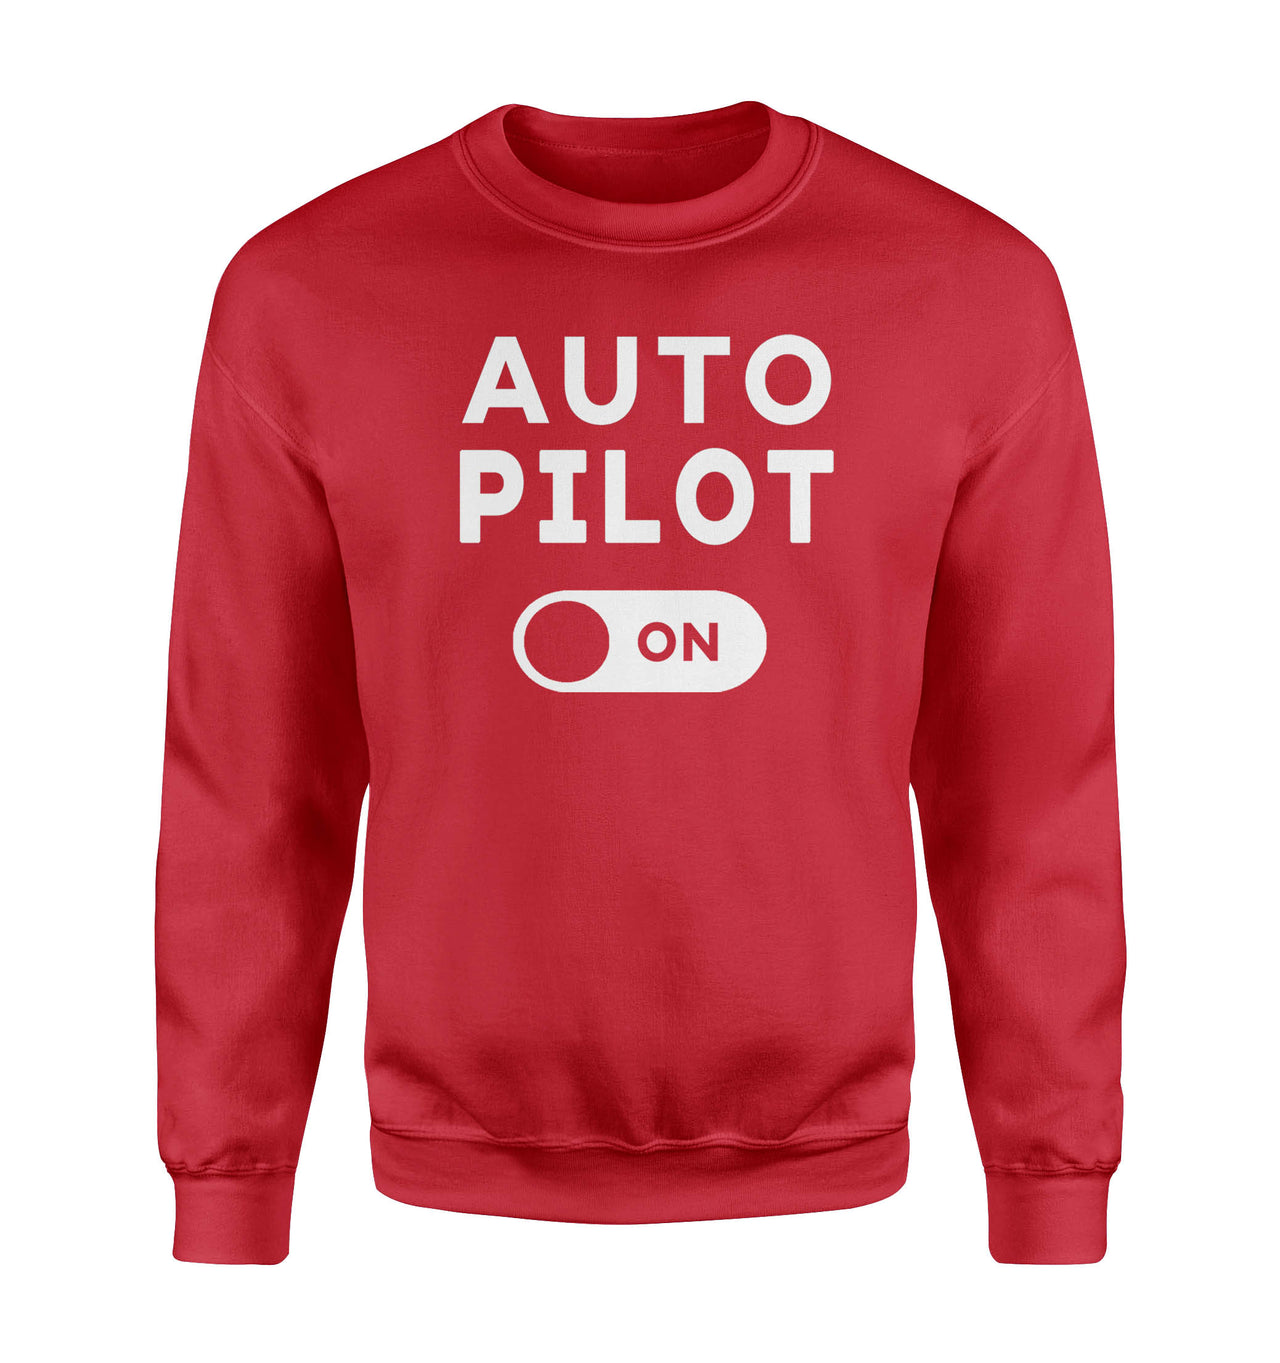 Auto Pilot ON Designed Sweatshirts